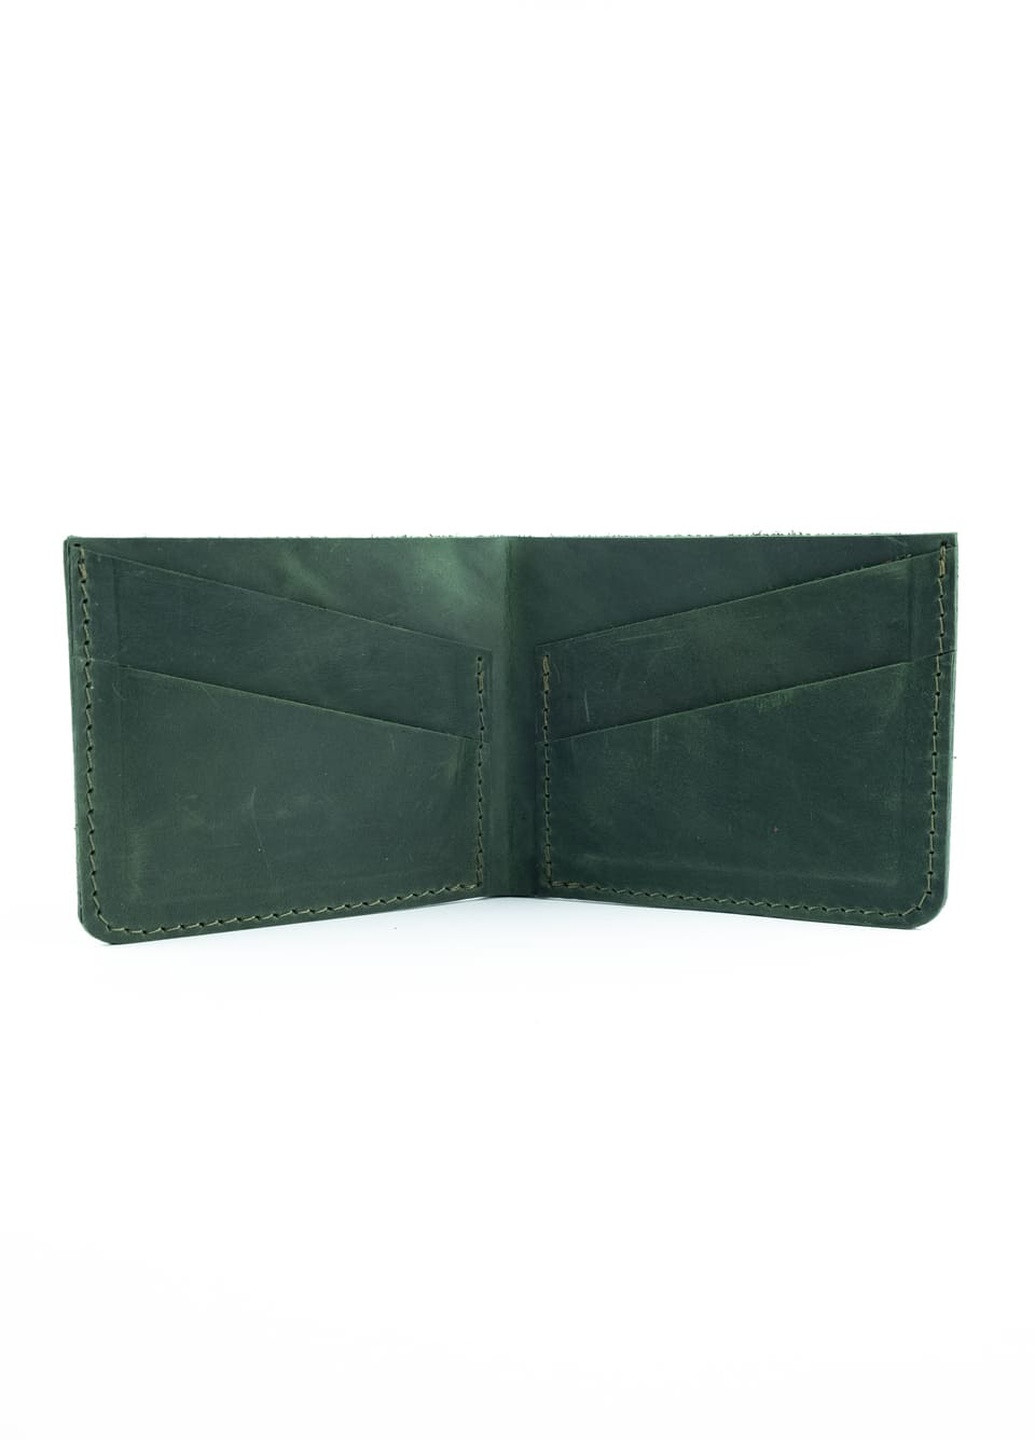 Кожаный бумажник кошелек бифолд Jet зеленый винтажный Kozhanty (252316664)